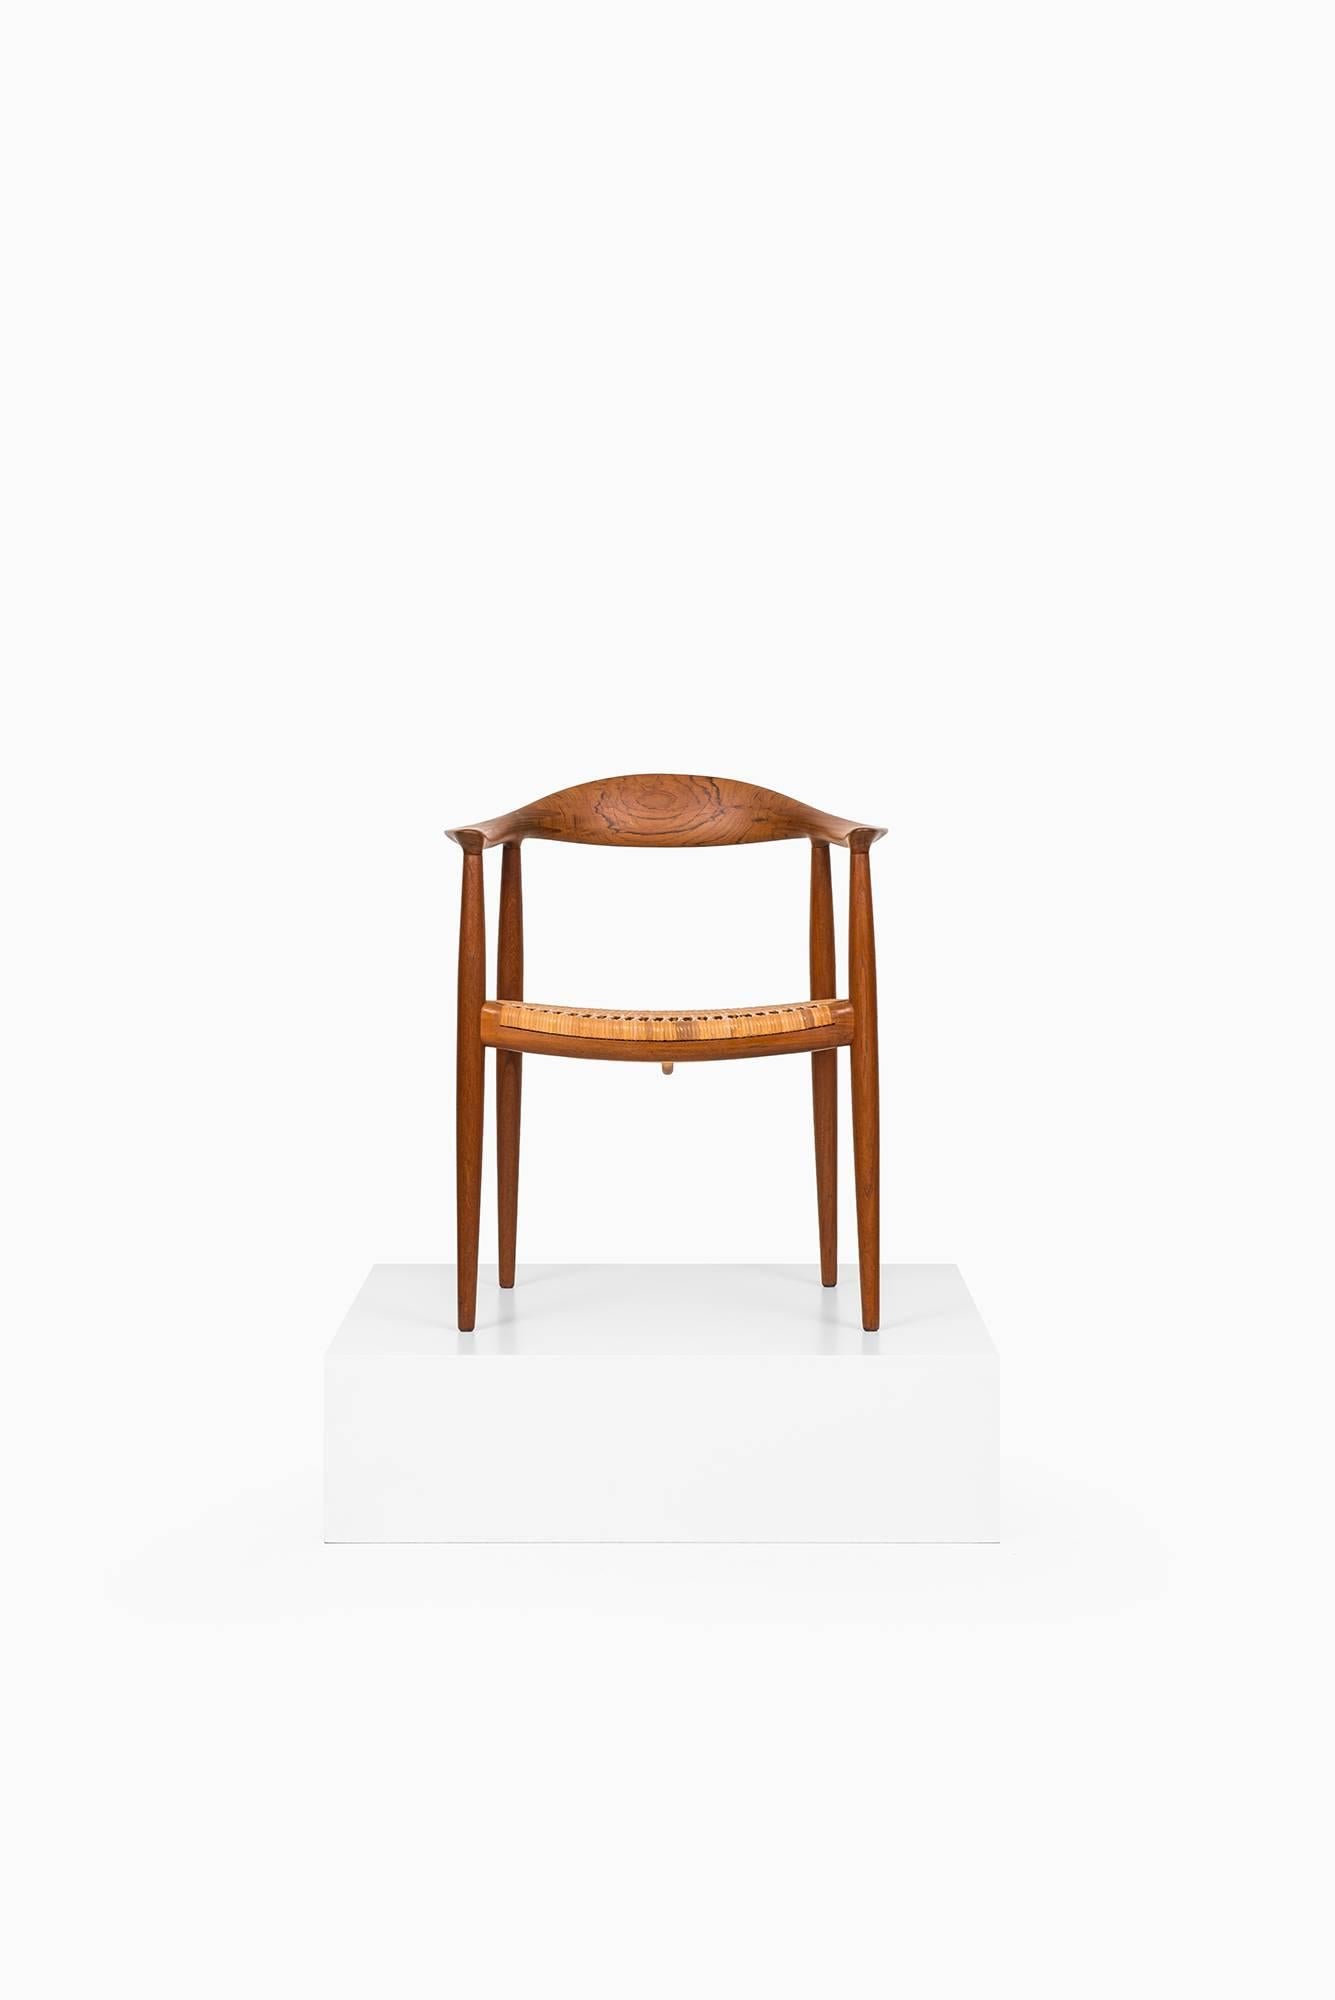 Rare armchair model JH-501 / The chair designed by Hans Wegner. Produced by Johannes Hansen in Denmark.